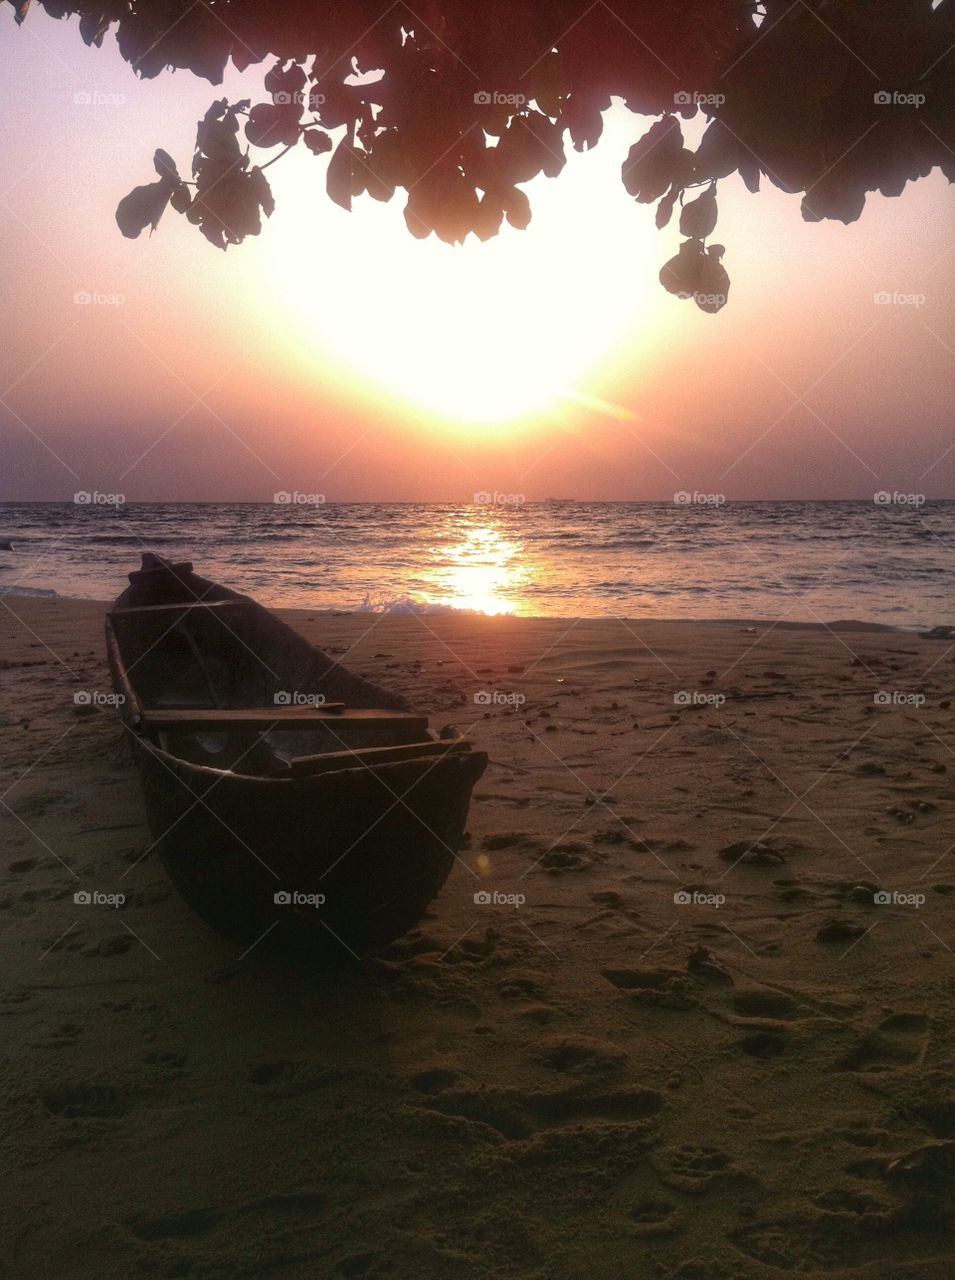 Boat in the beach in Kribi, Cameroon